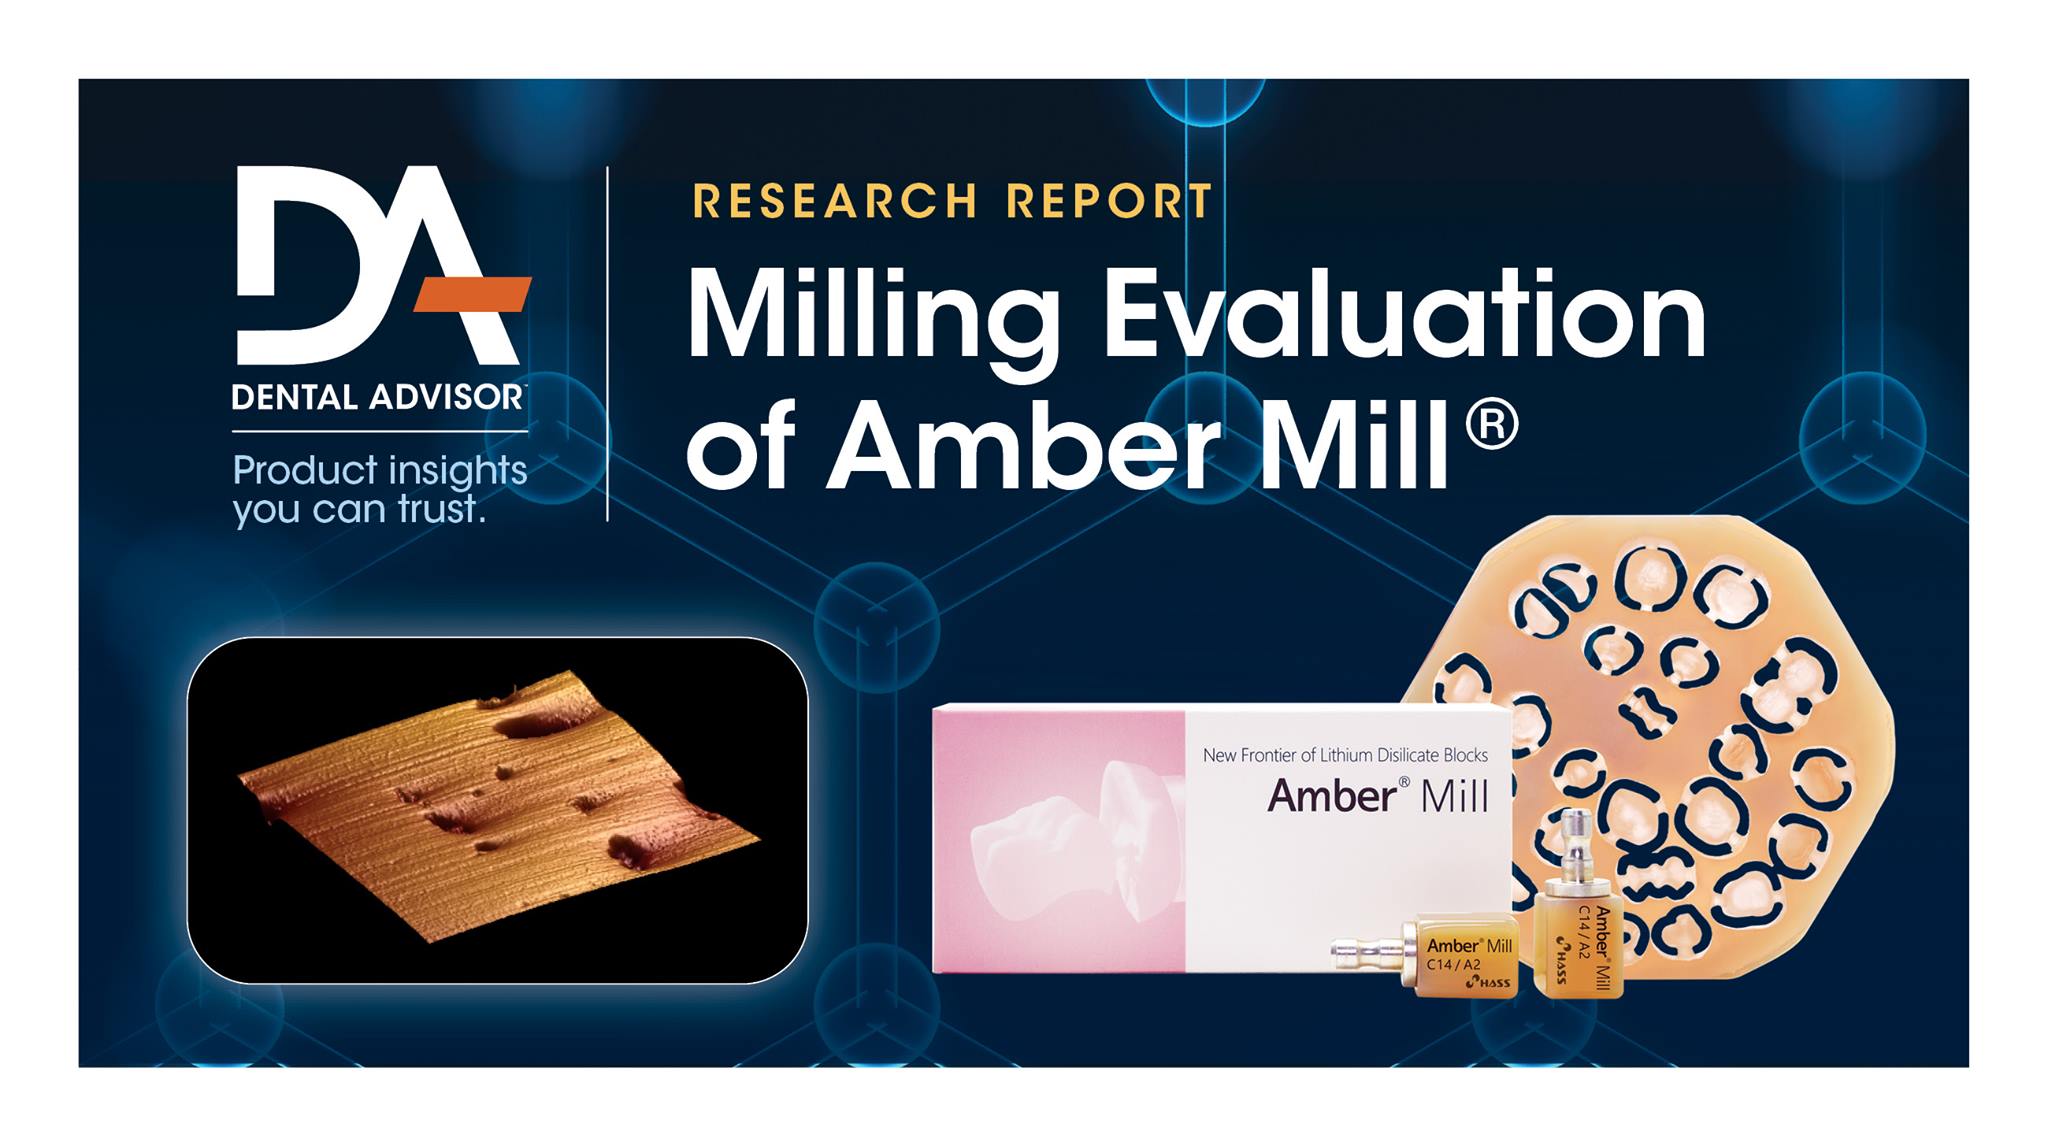 [Dental advisor] Research Report - Amber Mill